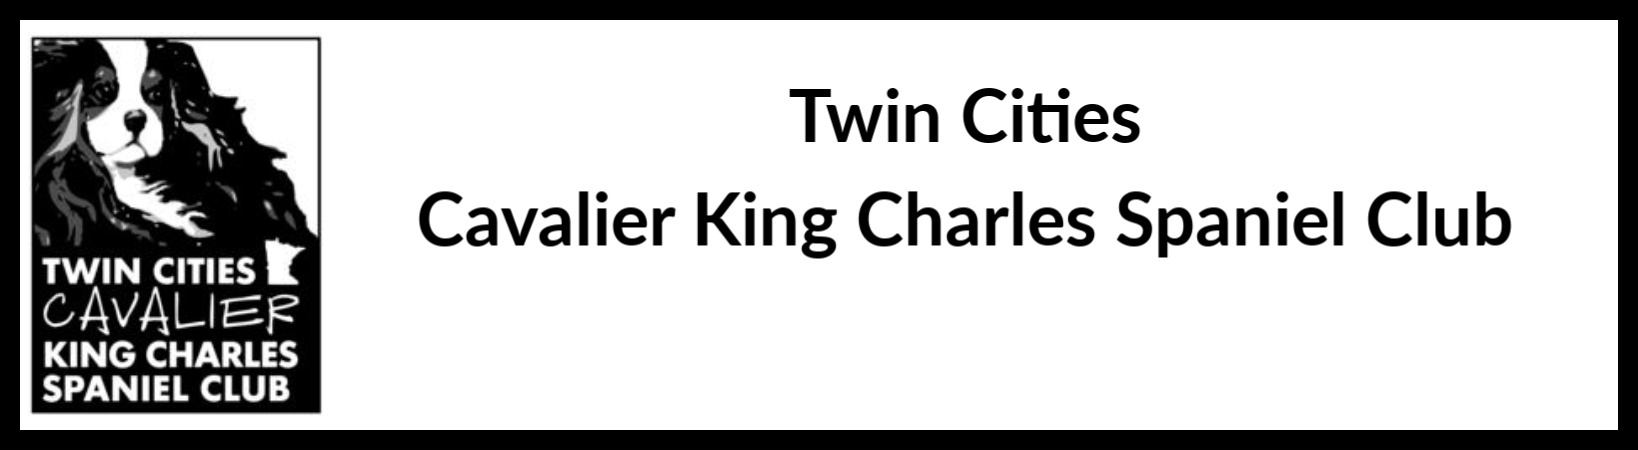 Twin Cities Cavalier King Charles Spaniel Club